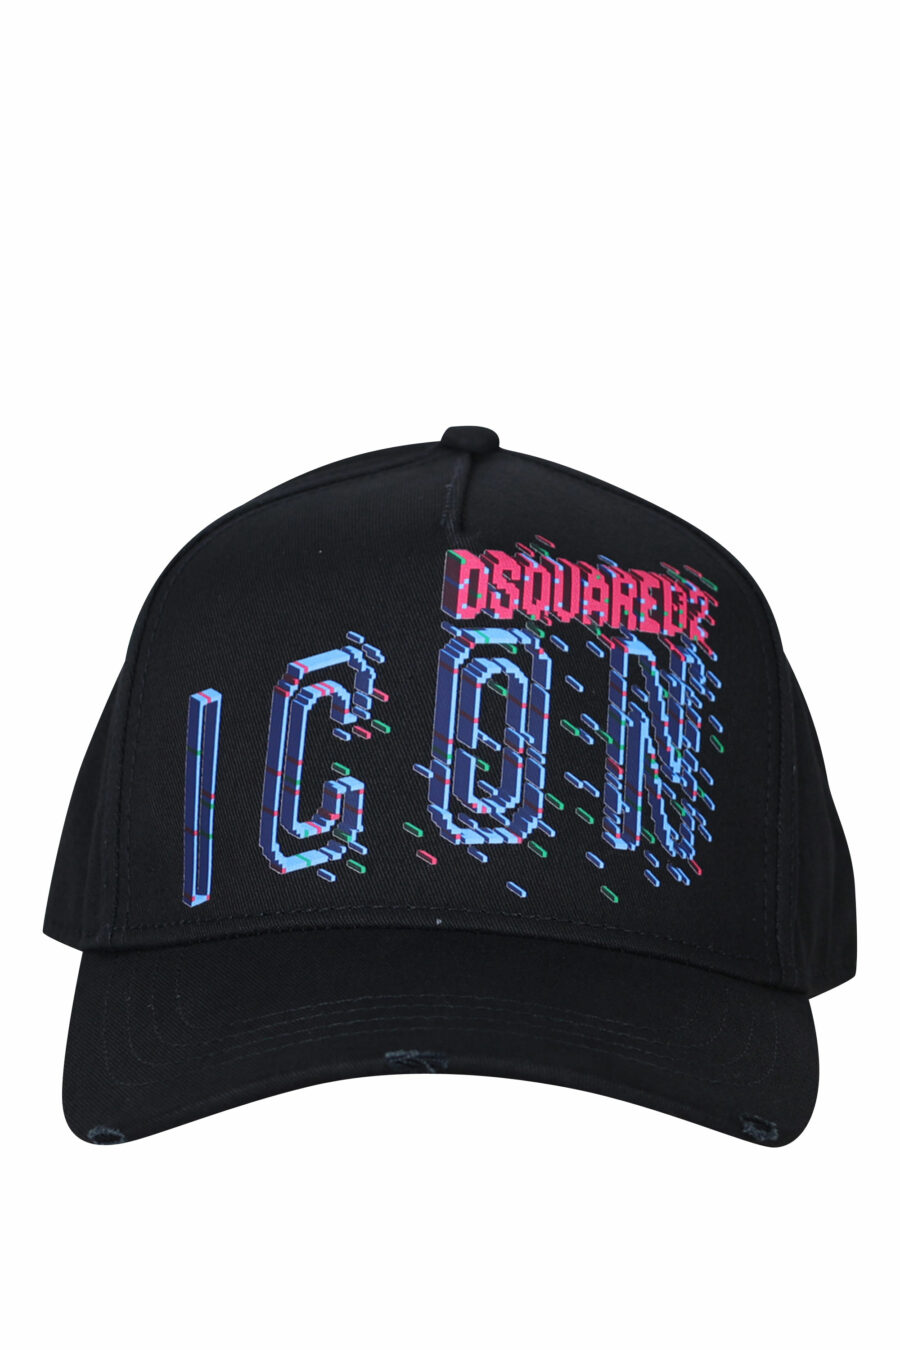 Black cap with turquoise and fuchsia "icon pixeled" logo - 8055777222751